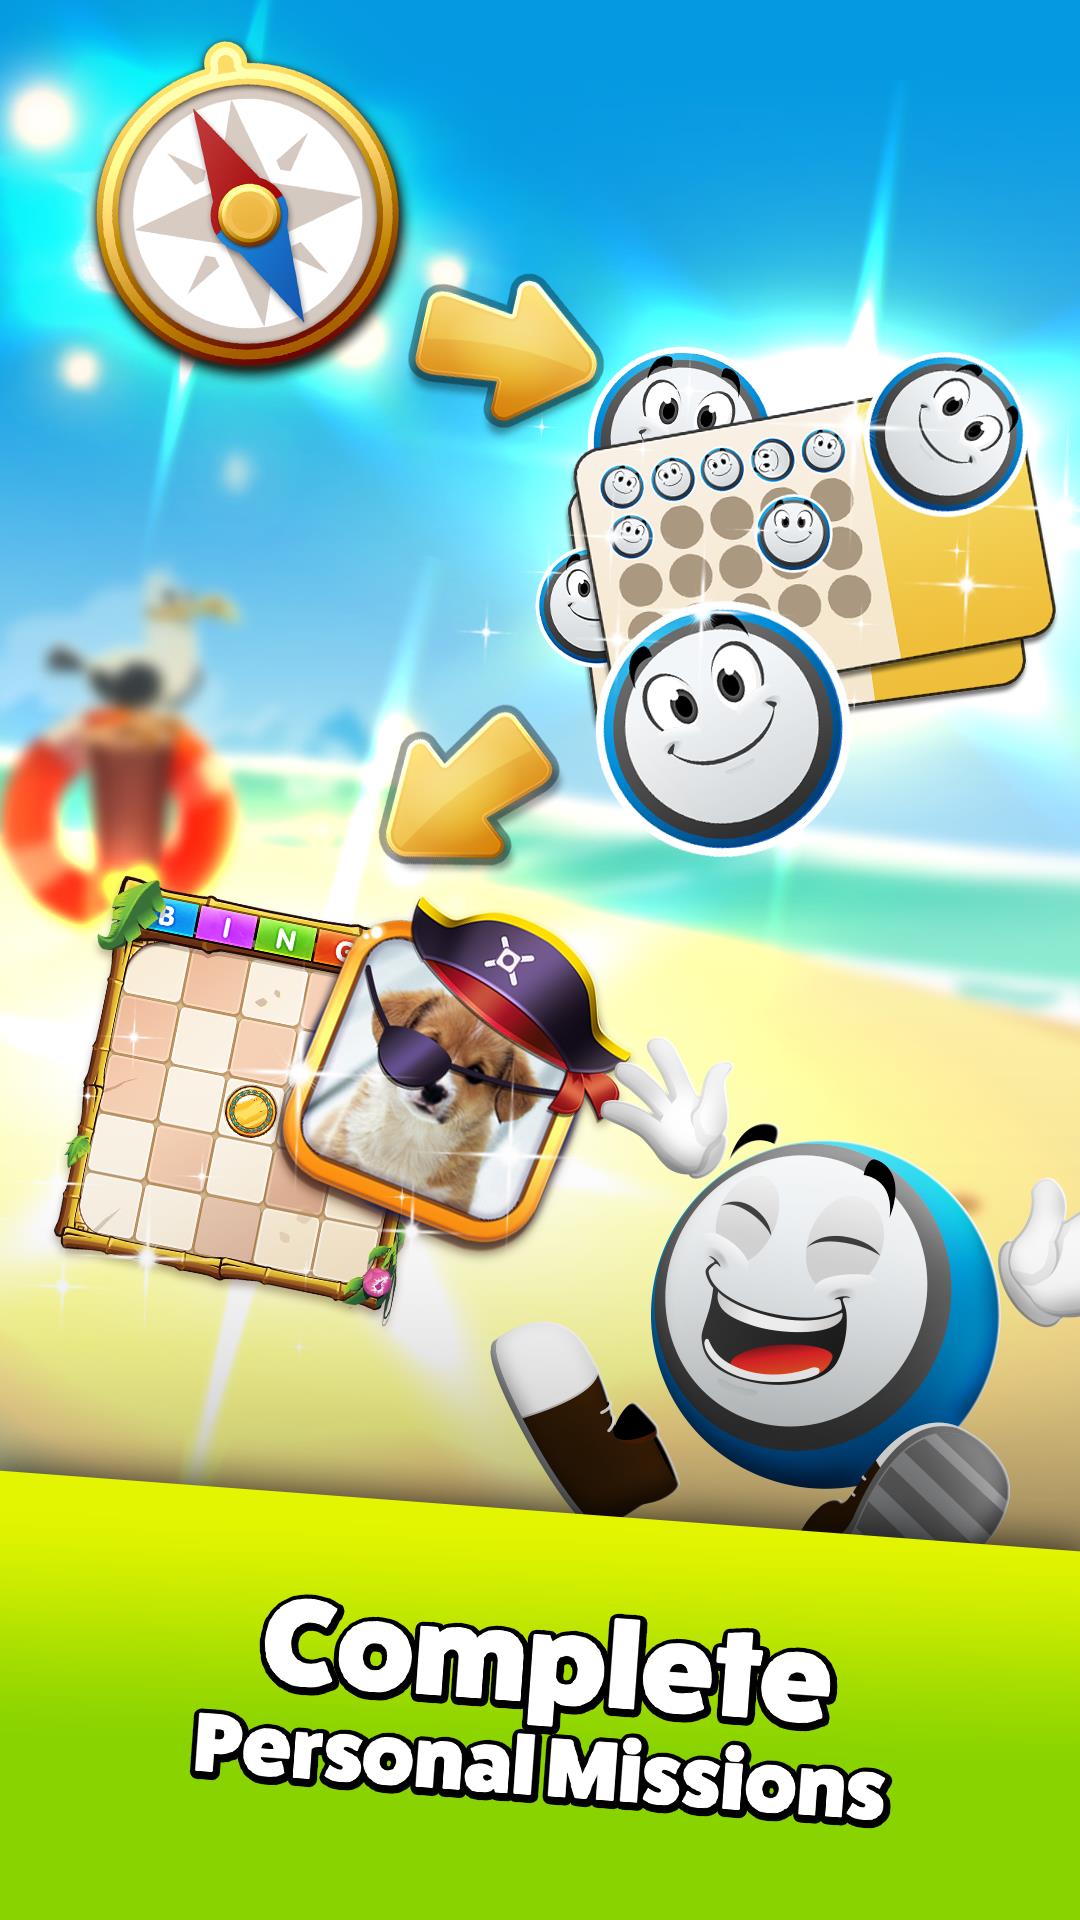 GamePoint Bingo - Bingo games Screenshot 5